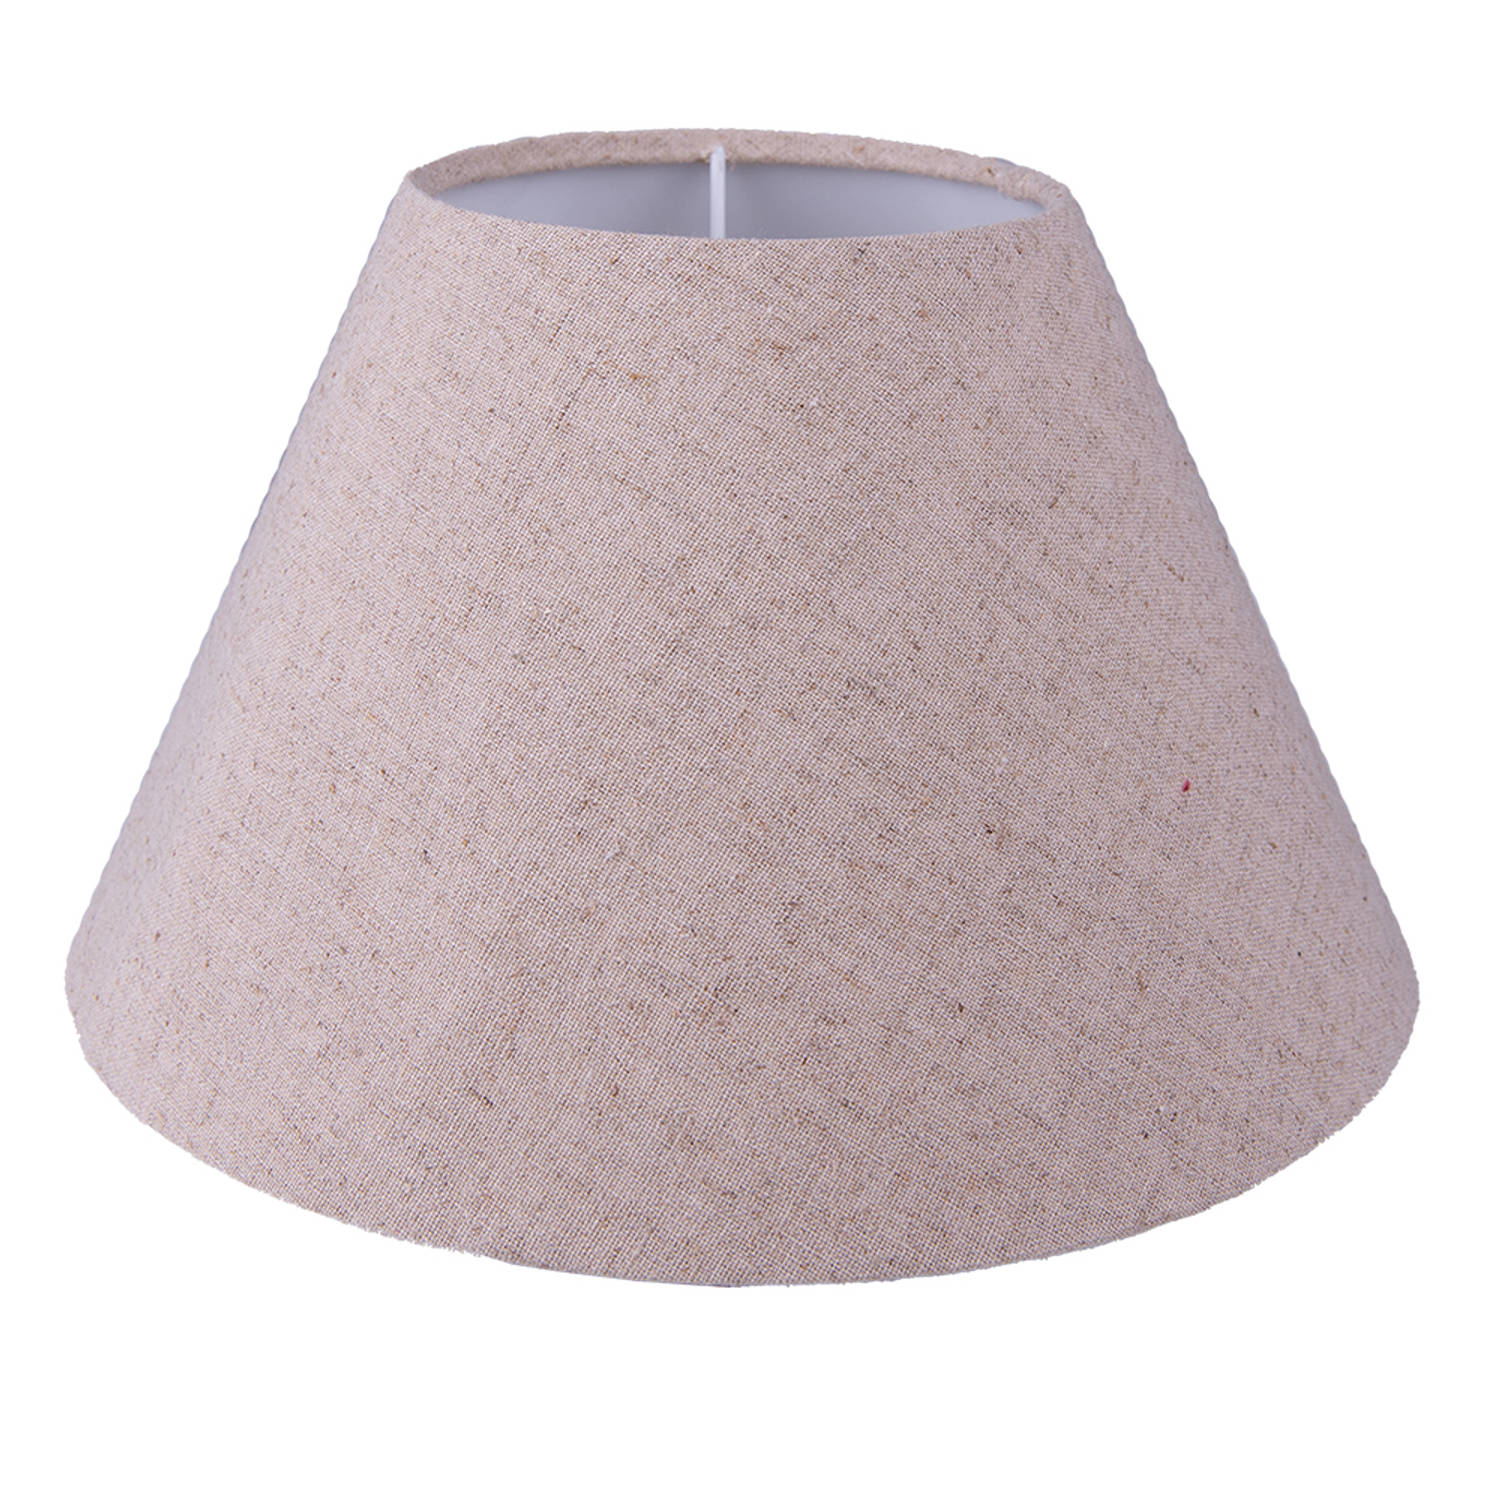 HAES DECO Lampenkap Natural Cosy beige rond formaat Ø 26x15 cm, voor Fitting E27 Tafellamp, Hanglamp